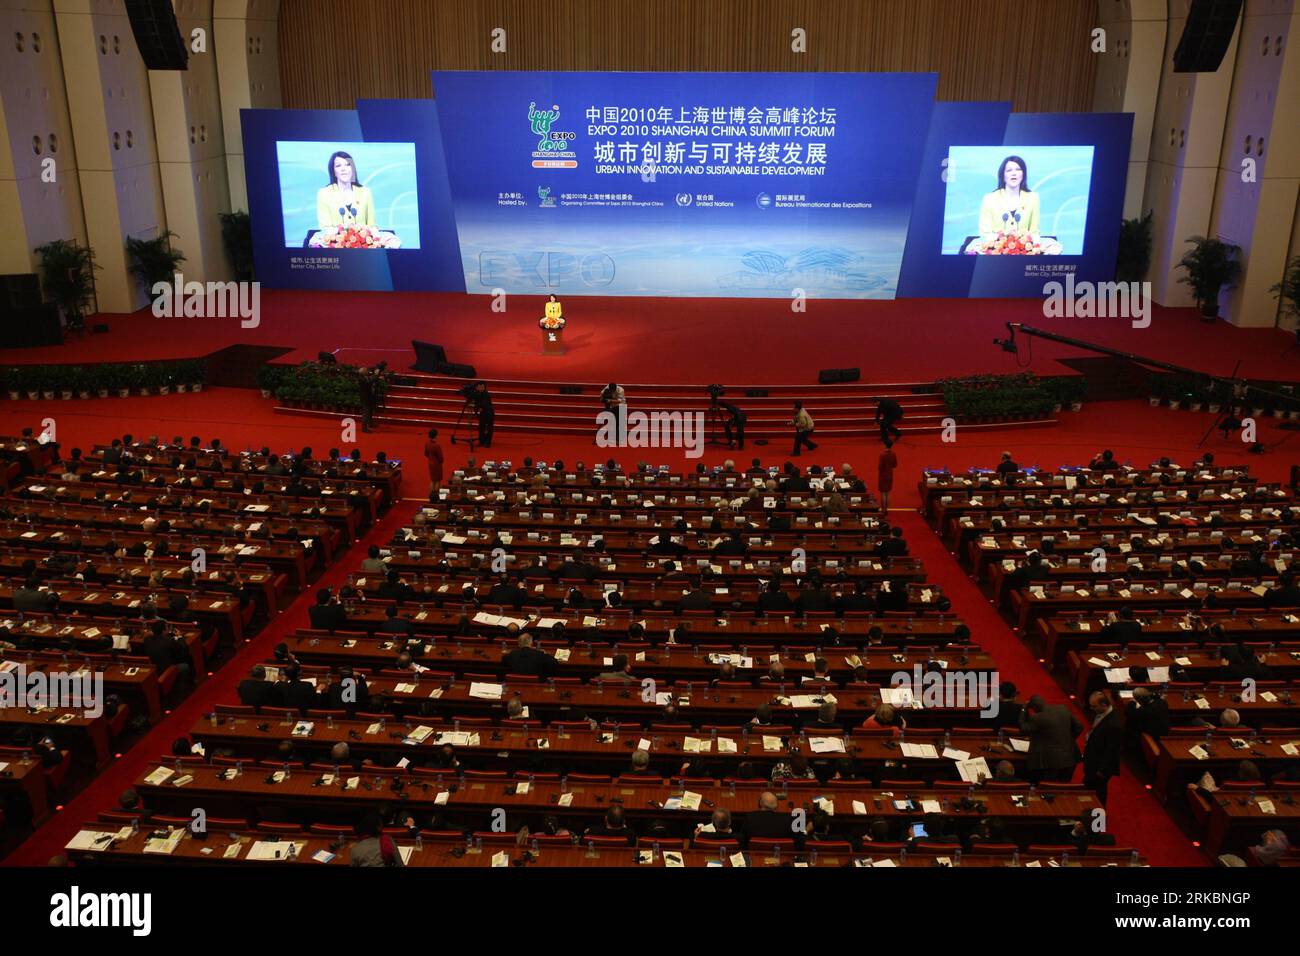 Bildnummer: 54586554  Datum: 31.10.2010  Copyright: imago/Xinhua (101031) -- SHANGHAI, Oct. 31, 2010 (Xinhua) -- Finnish Prime Minister Mari Kiviniemi gives a keynote speech at the opening plenary of the Expo 2010 Shanghai China Summit Forum held in Shanghai, east China, Oct. 31, 2010. The Shanghai World Expo 2010 is set to be closed later here Sunday. (Xinhua/Pei Xin) (wxy) WORLD EXPO-SHANGHAI-SUMMIT FORUM-PLENARY (CN) PUBLICATIONxNOTxINxCHN EXPO Gipfeltreffen Schluss Schliessung Konferenz Forum kbdig xsp 2010 quer  o0 Totale, Weltausstellung, People, Politik    Bildnummer 54586554 Date 31 10 Stock Photo